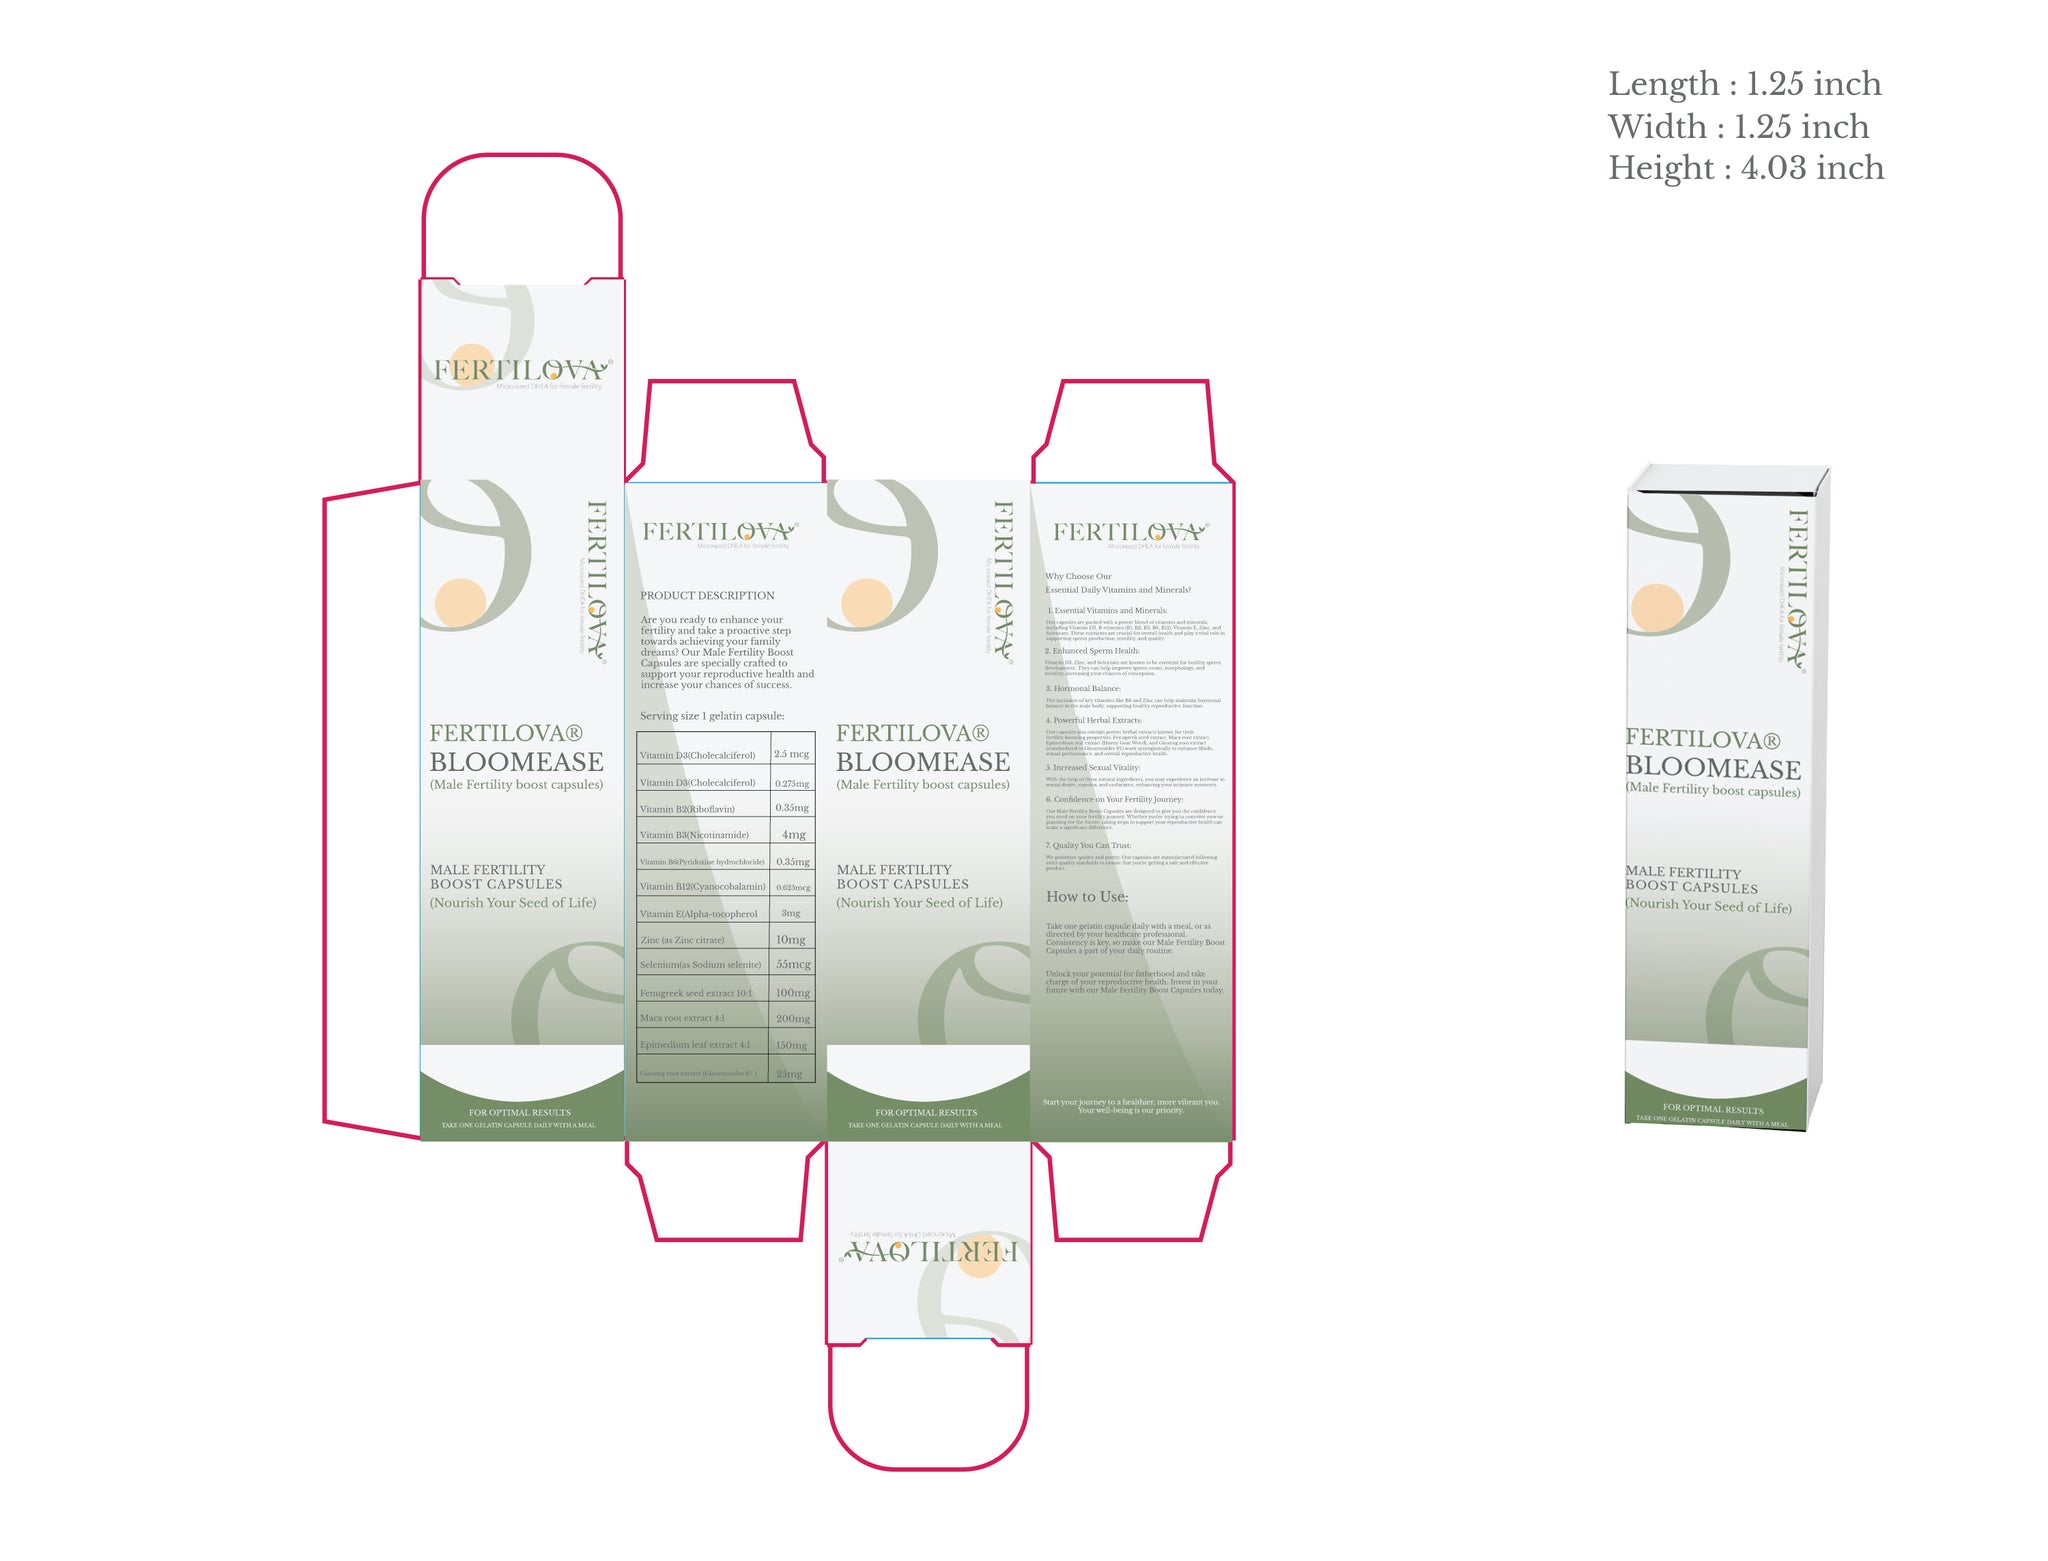 Fertilova® - Bloomease (Male Fertility boost capsules)